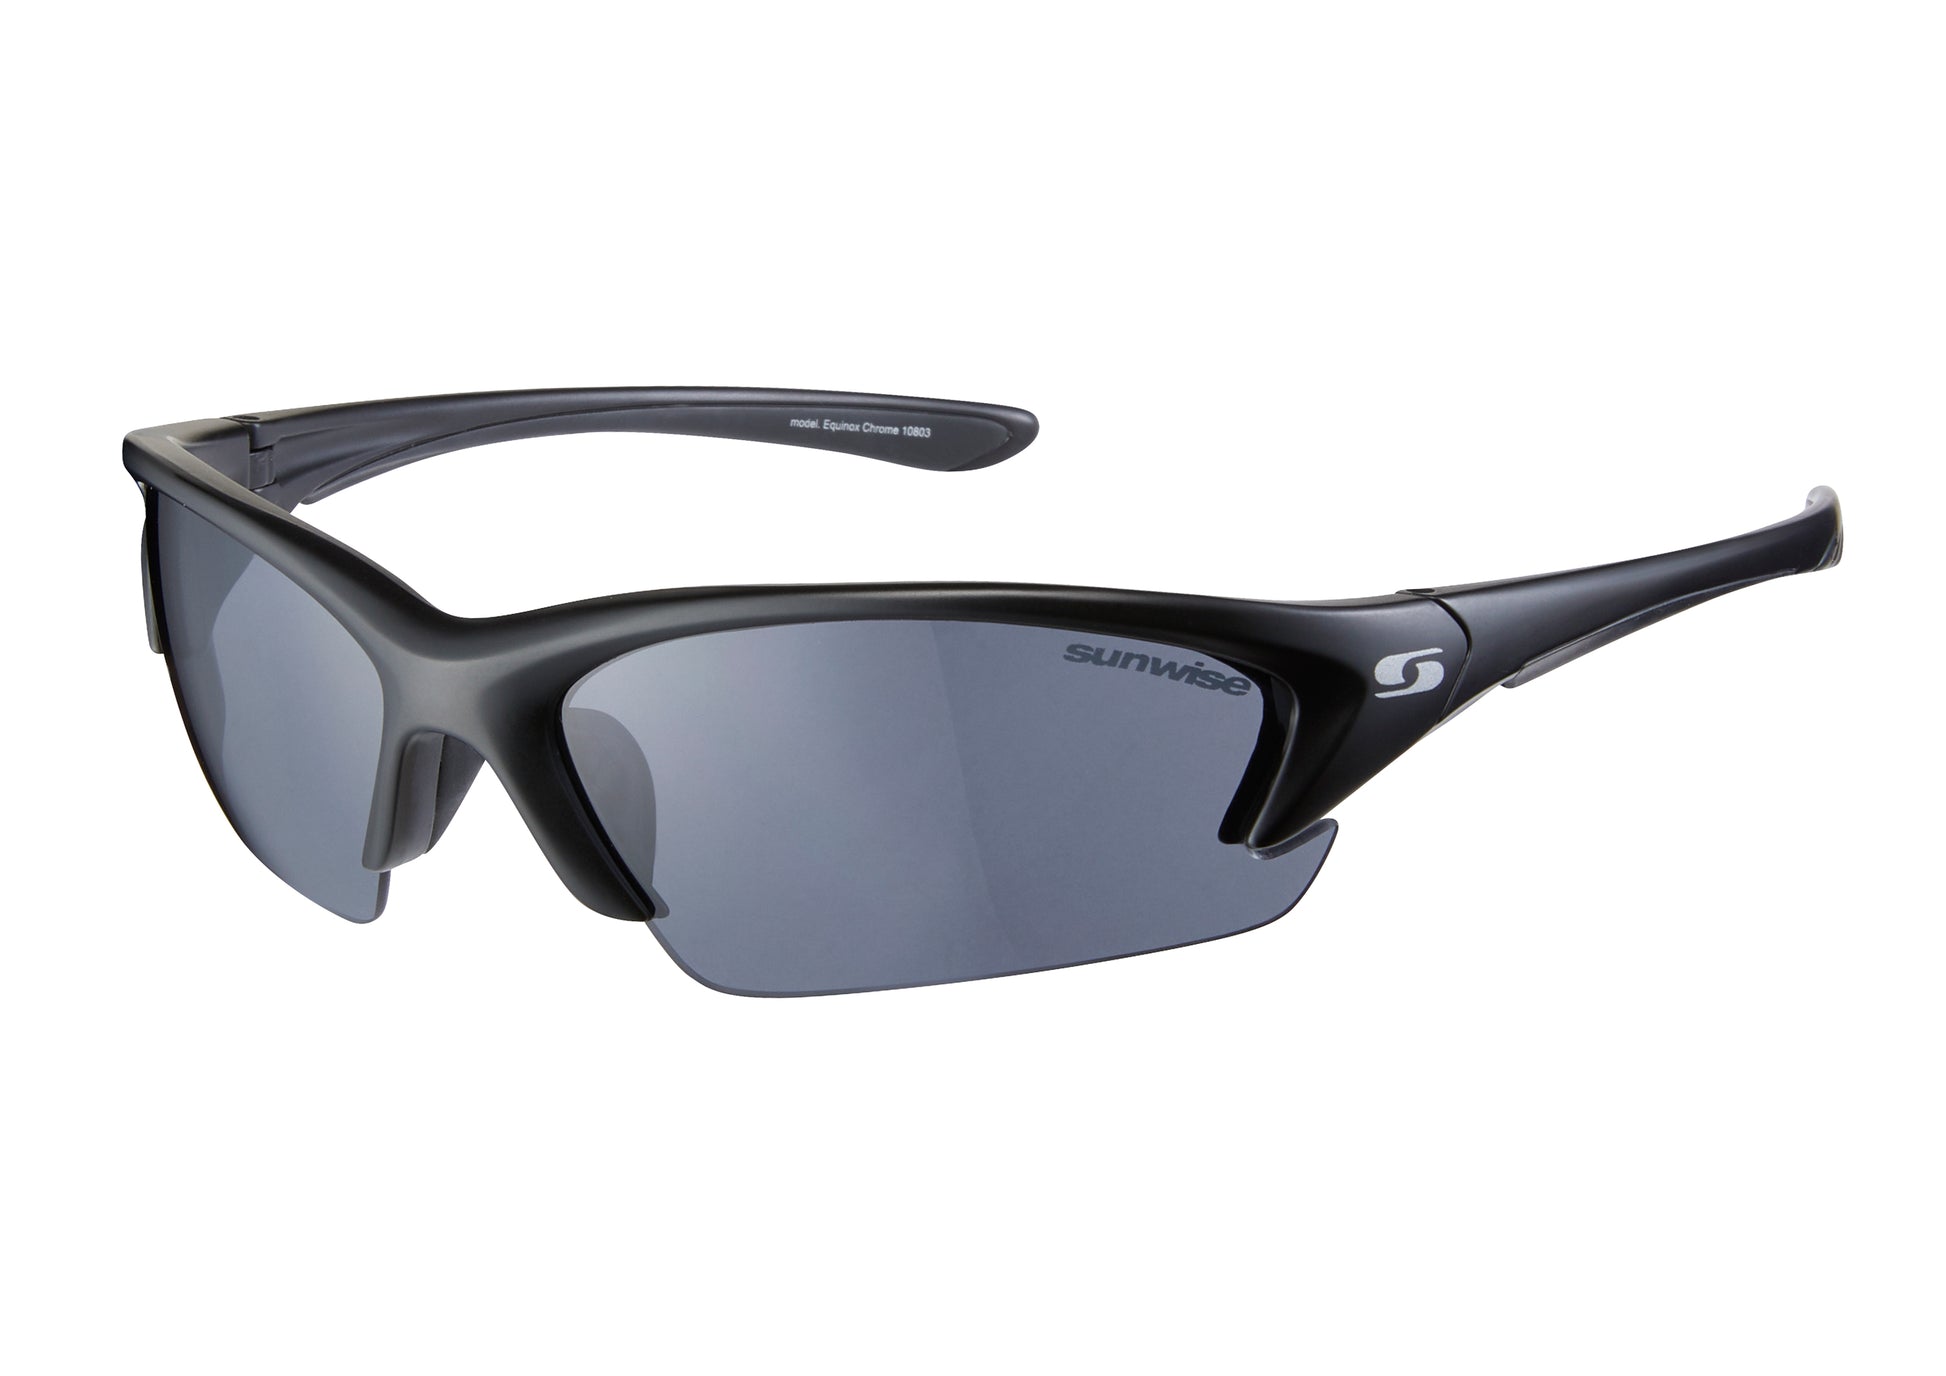 Sunwise Equinox jet Sports Sunglasses